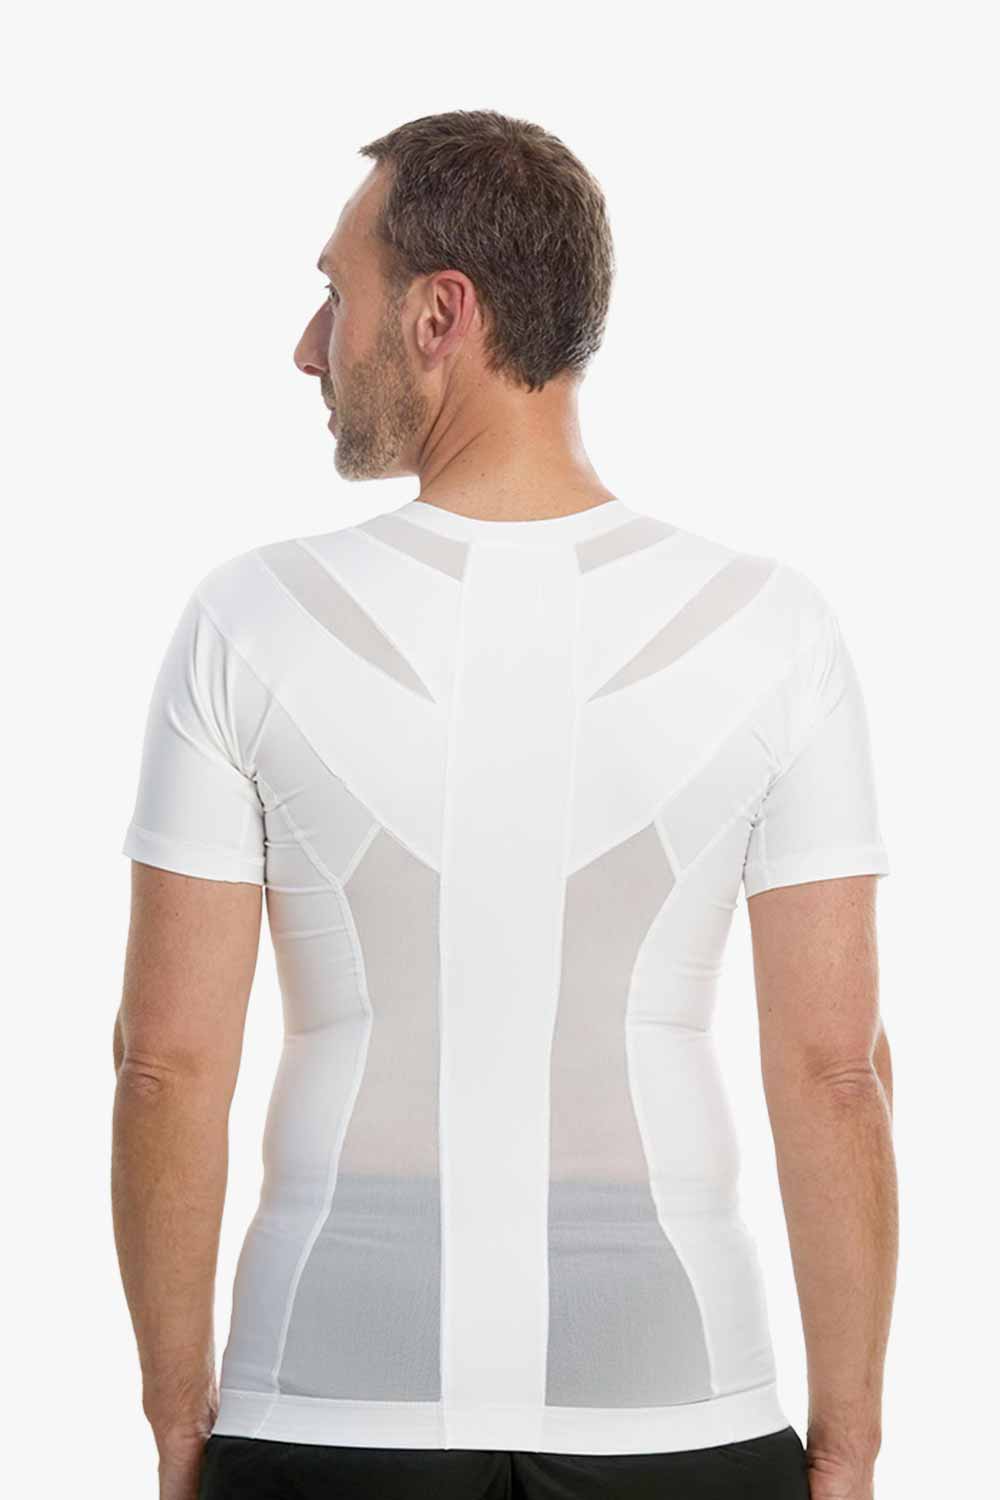 Posture clothing for men